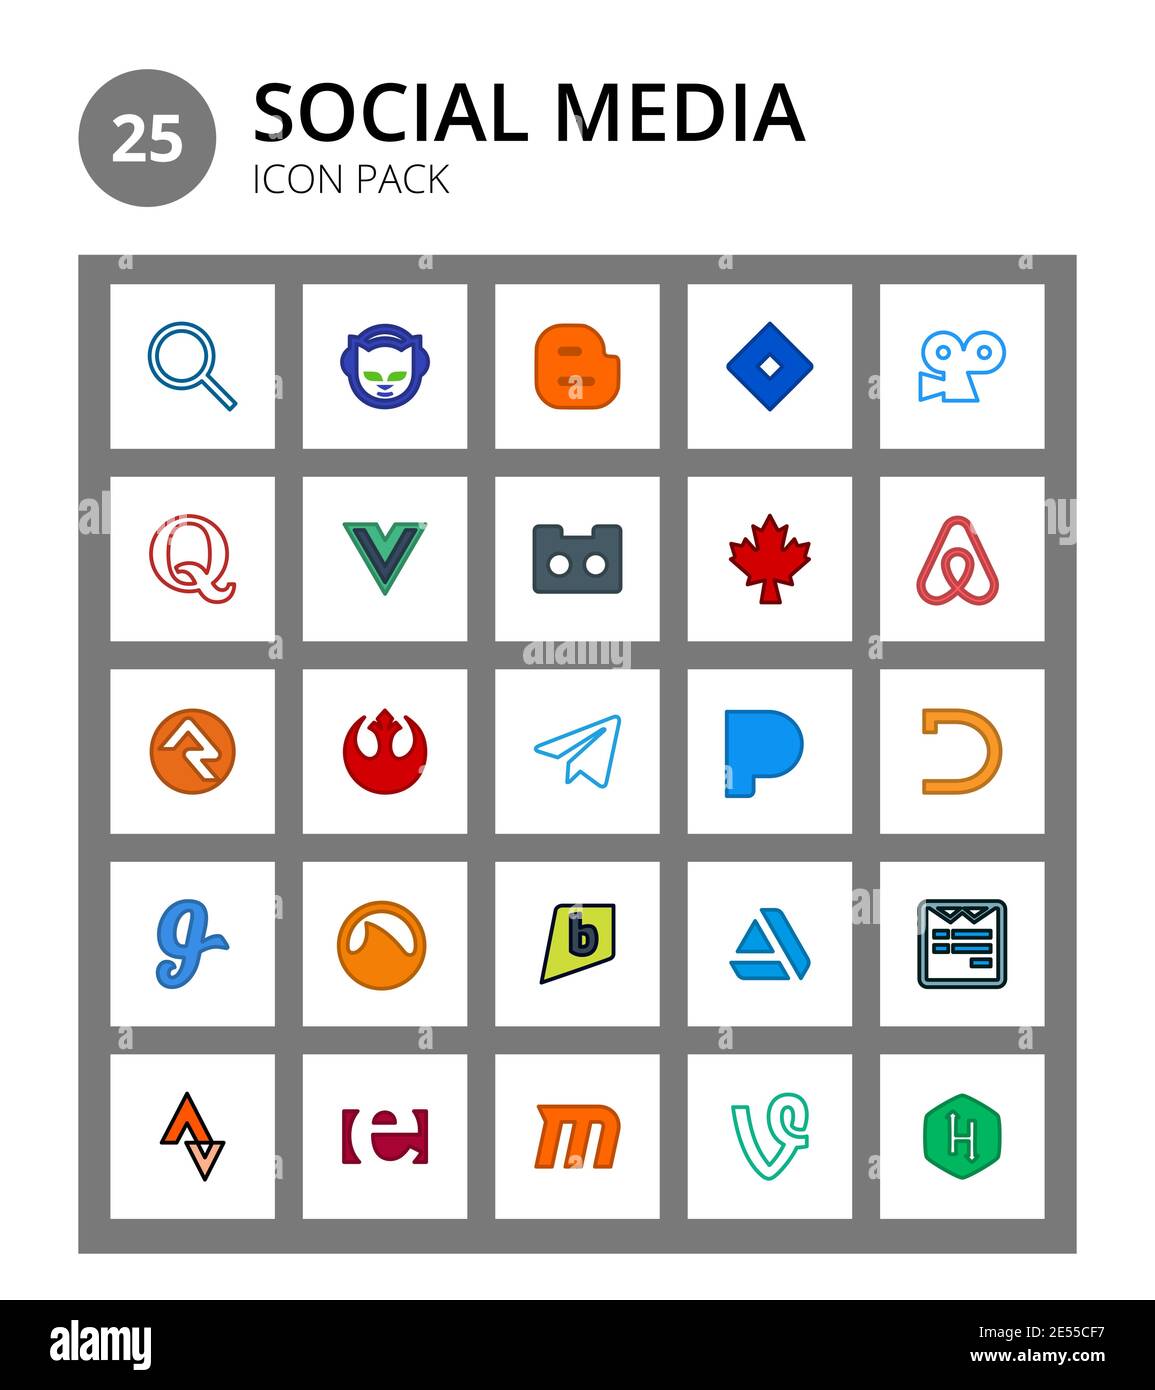 SocialMedia glide, pandora, canadian, telegram, rockrms Editable Vector Design Elements Stock Vector